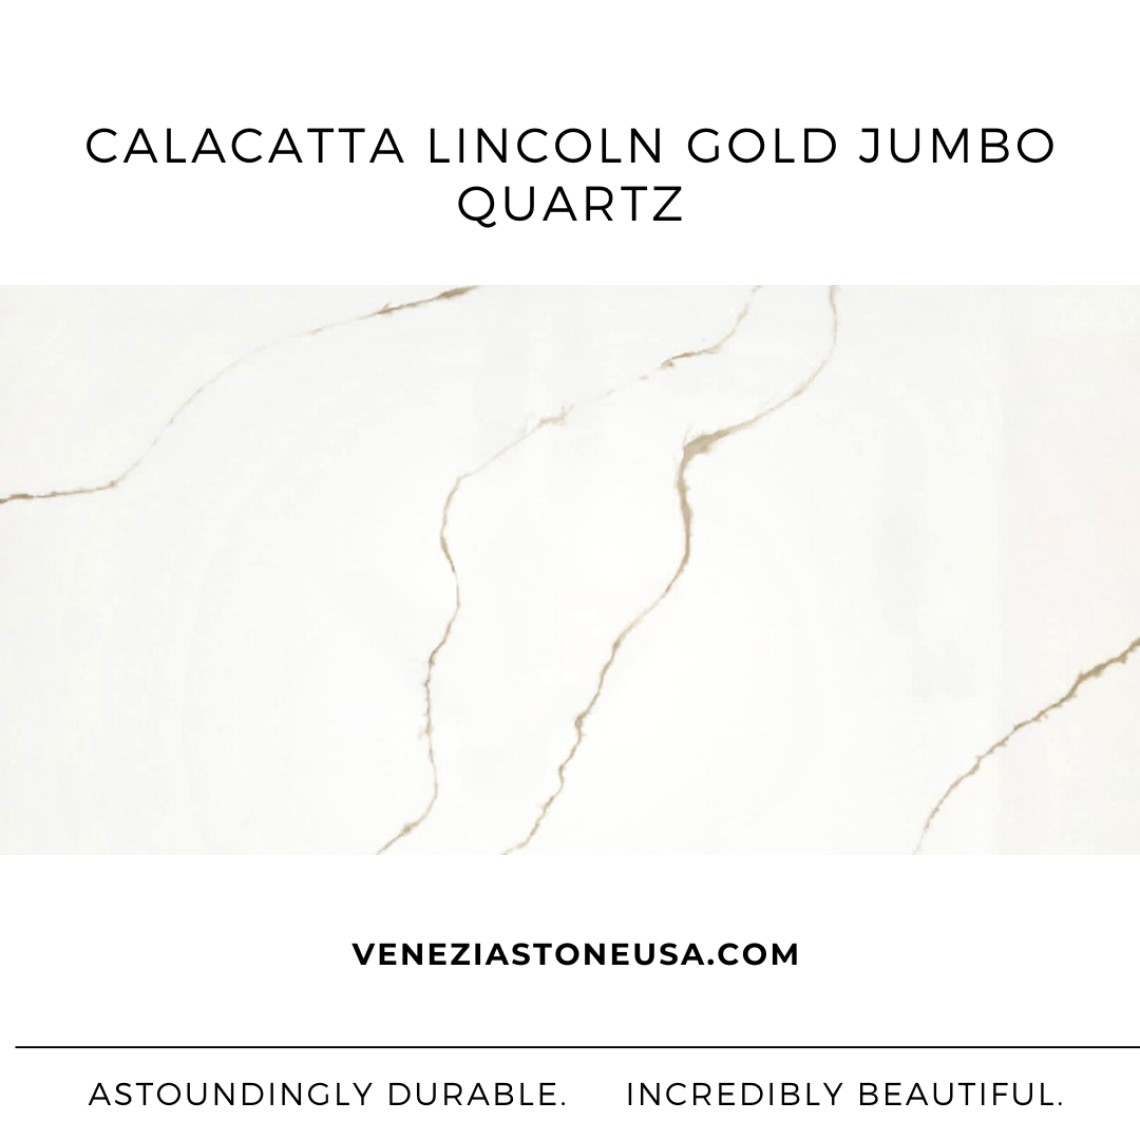 Calacatta Lincoln Gold Jumbo Quartz